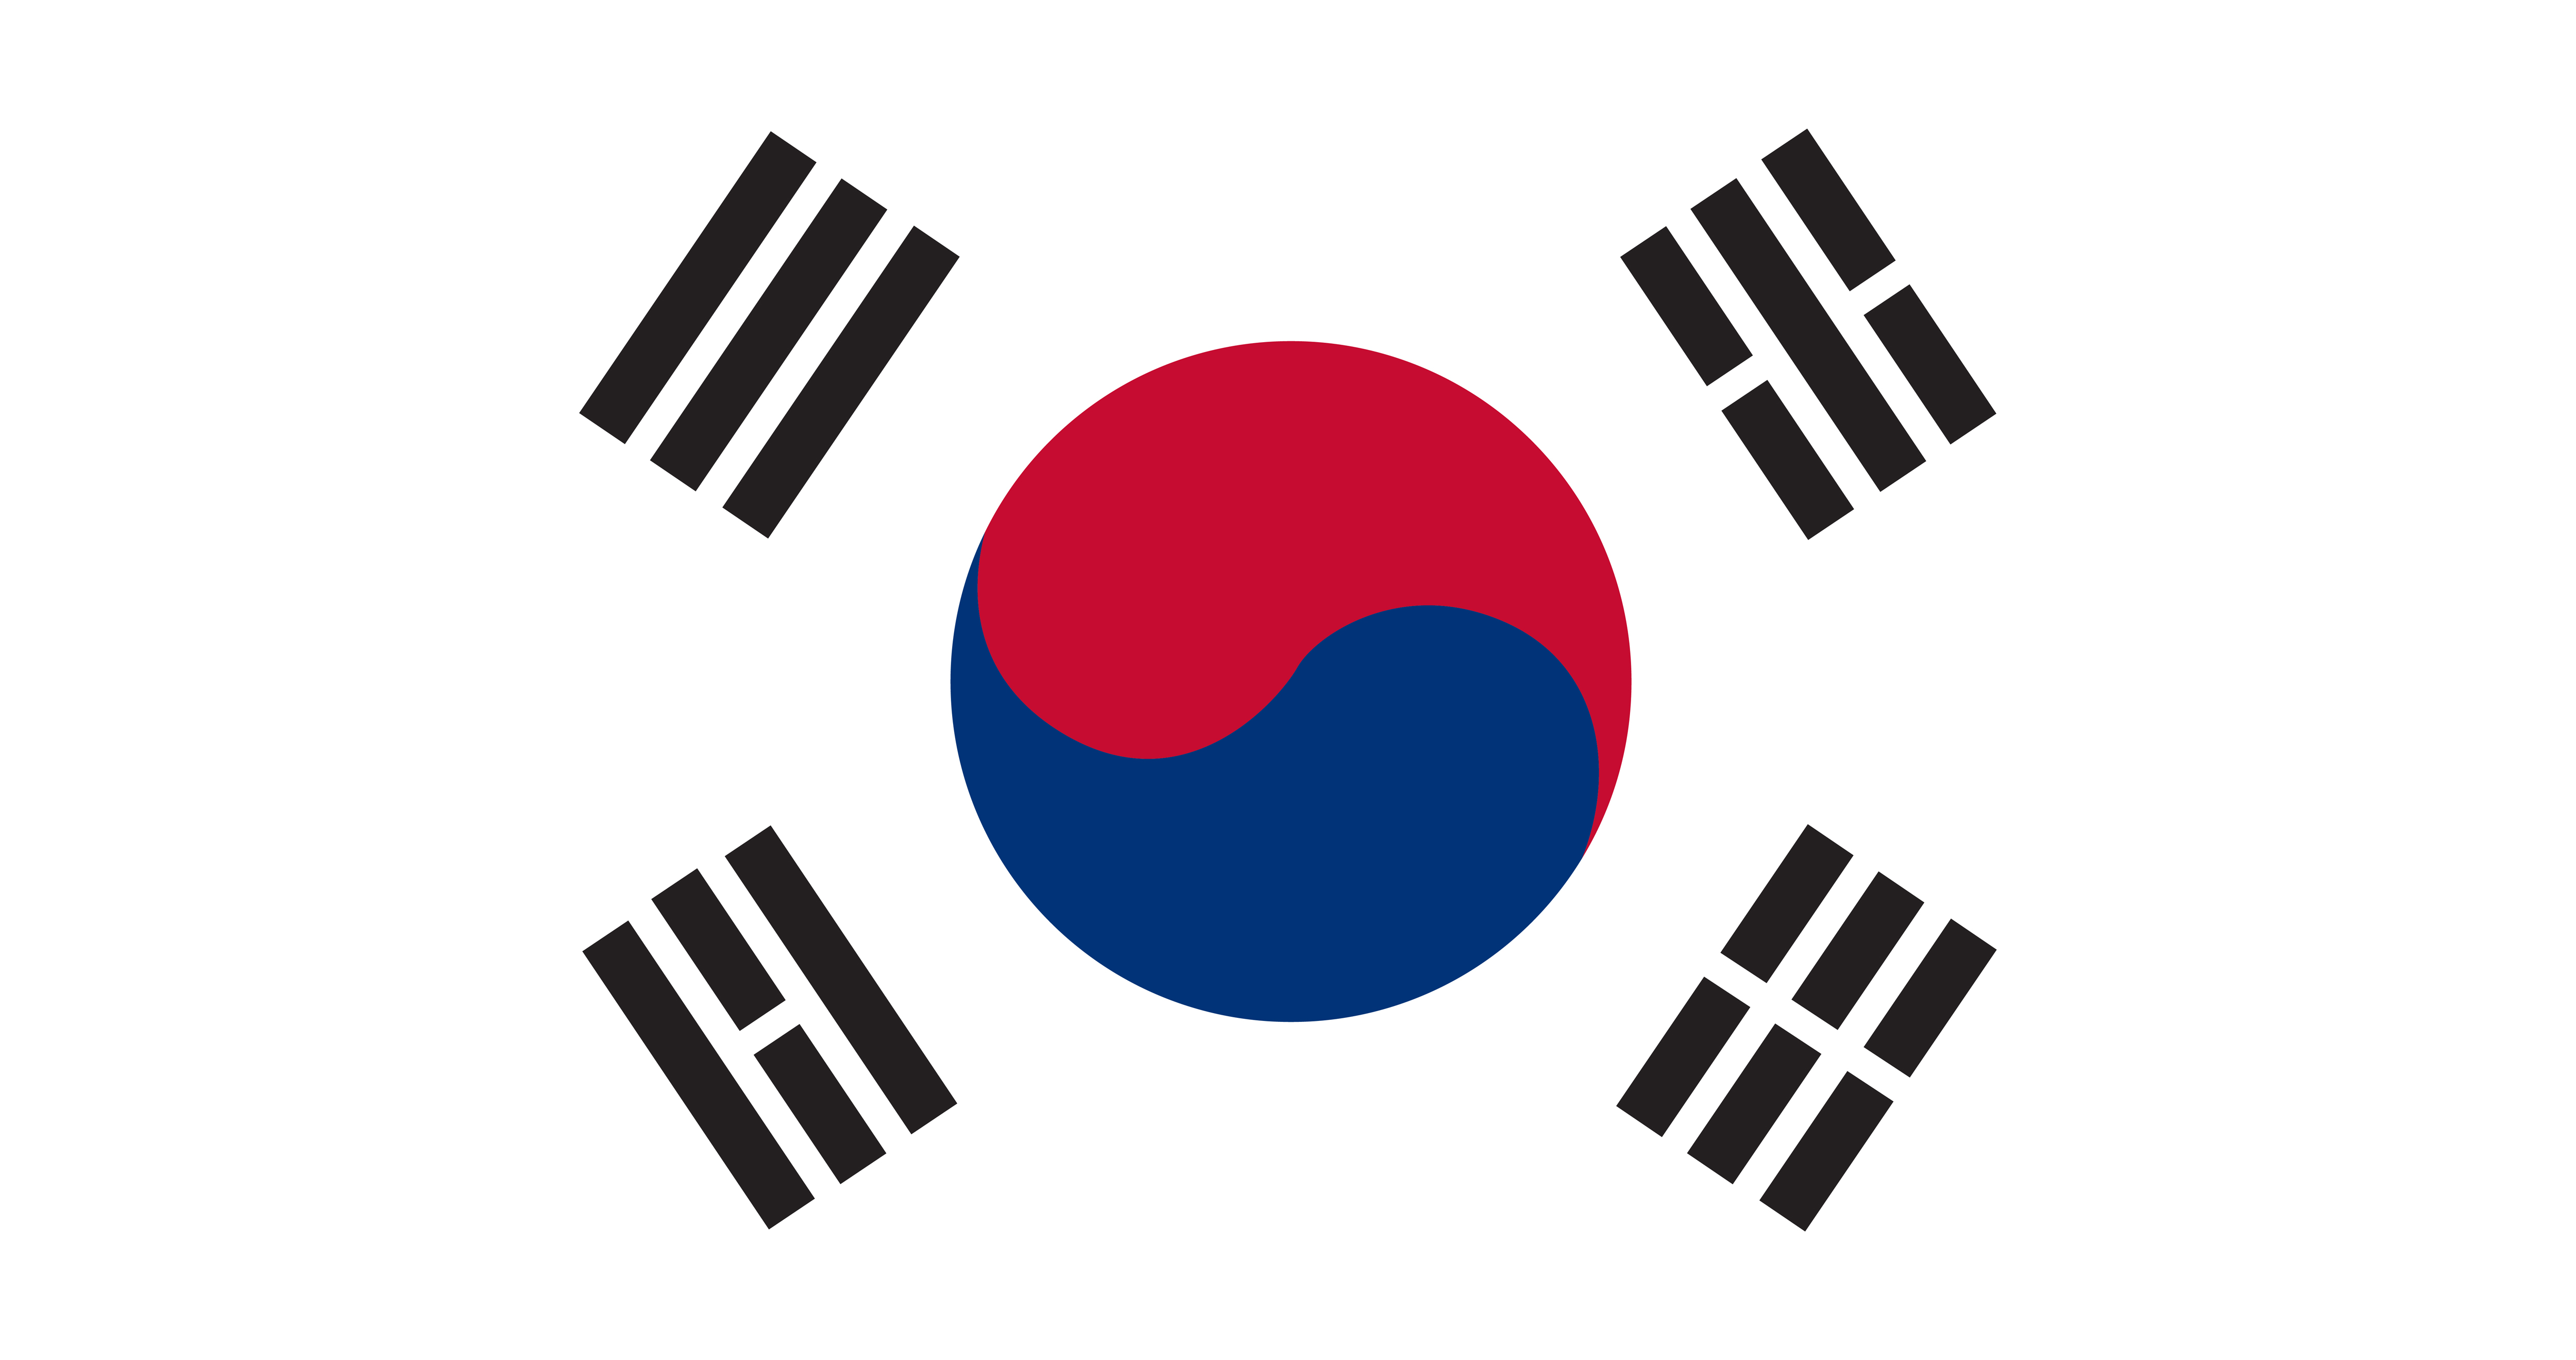 Illustration of South Korea flag - Download Free Vectors ...